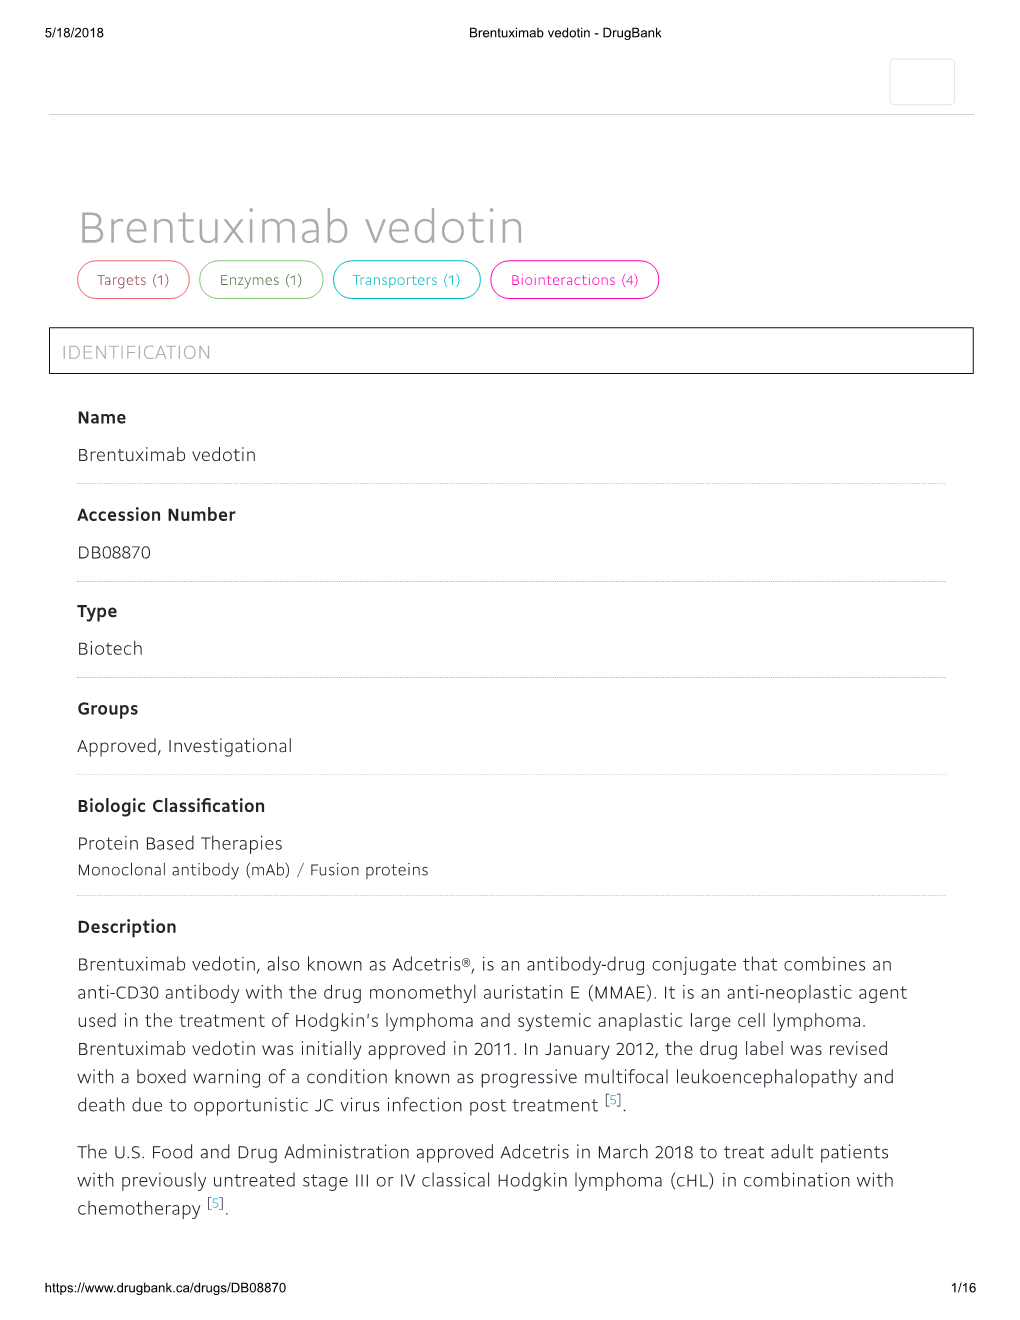 Brentuximab Vedotin - Drugbank